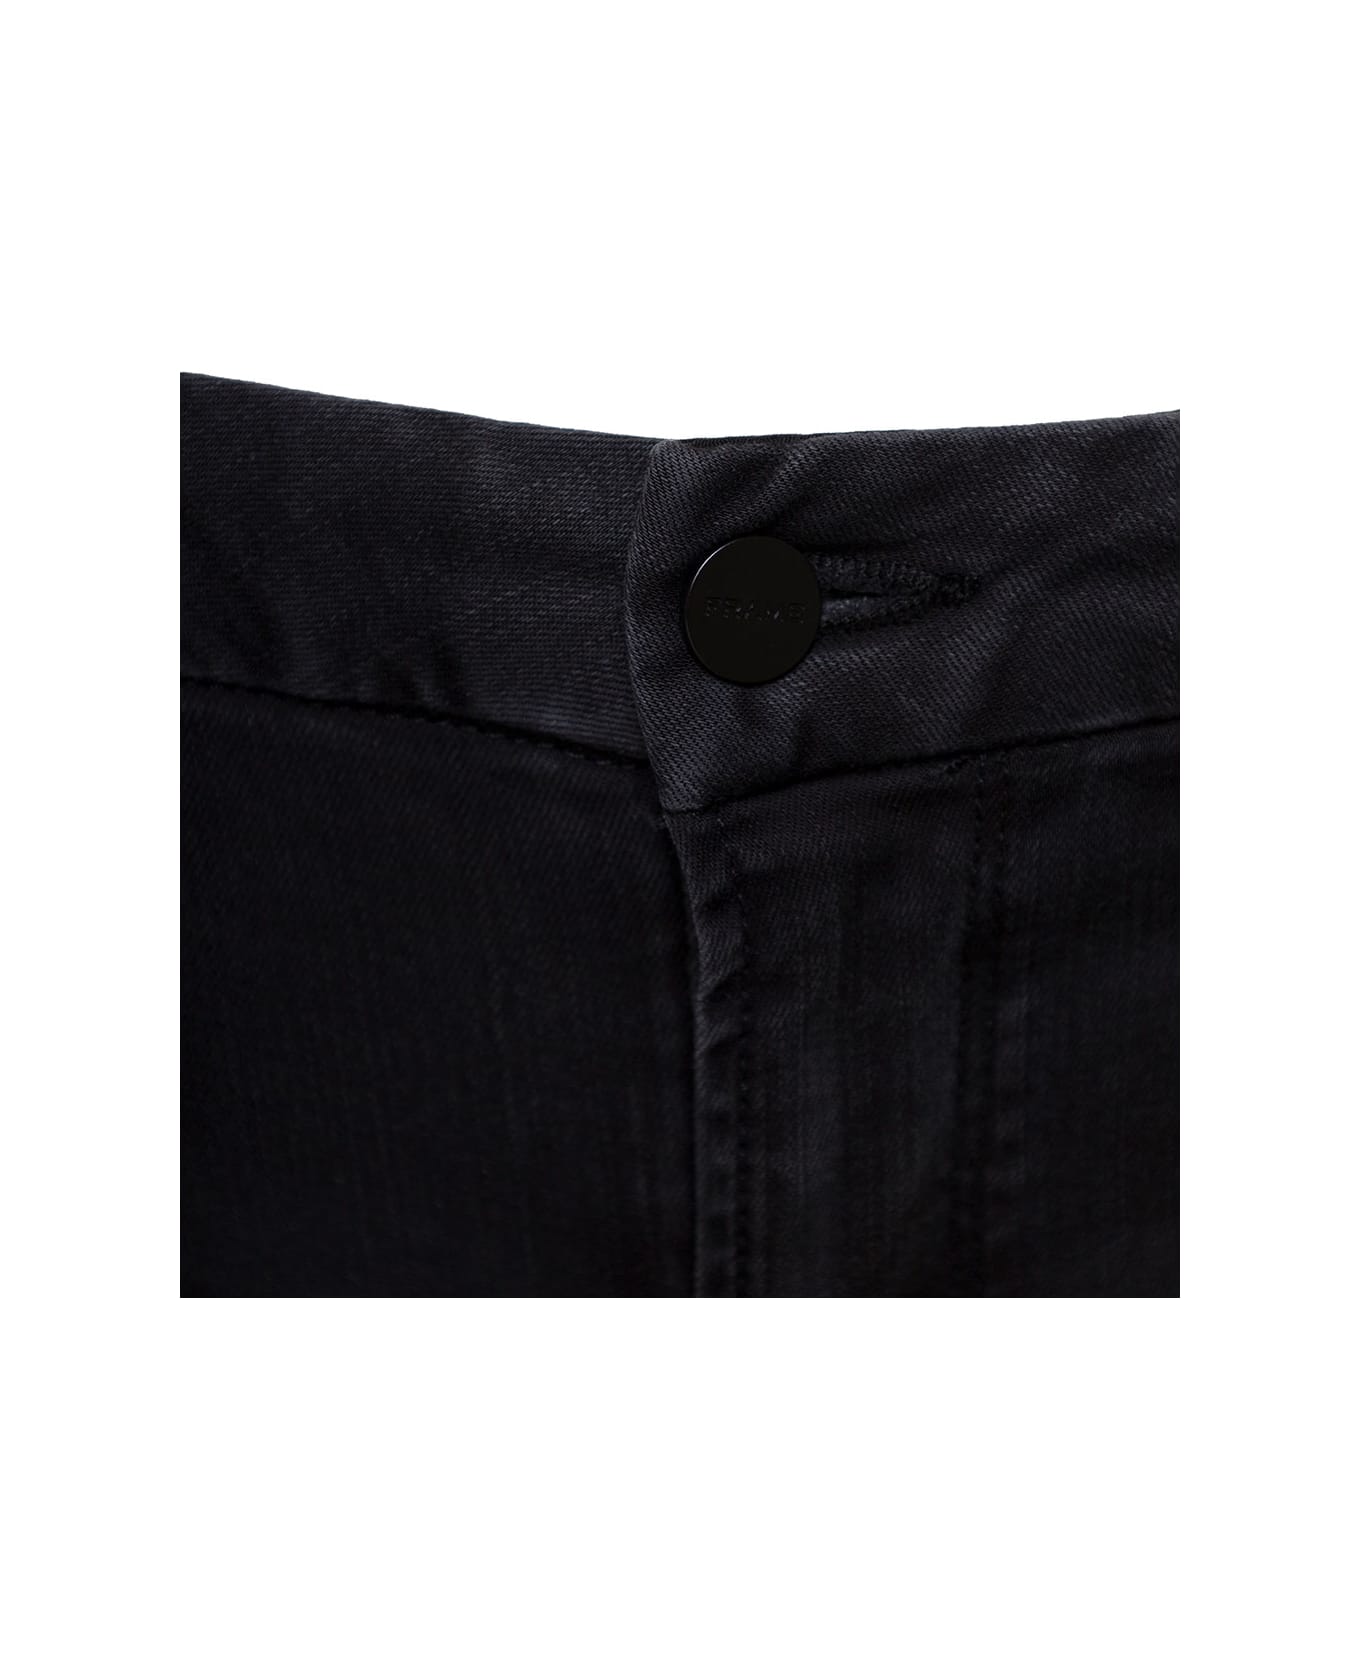 Frame 'le Crop Mini Boot' Black Five-pocket Jeans In Stretch Cotton Denim Woman - Black